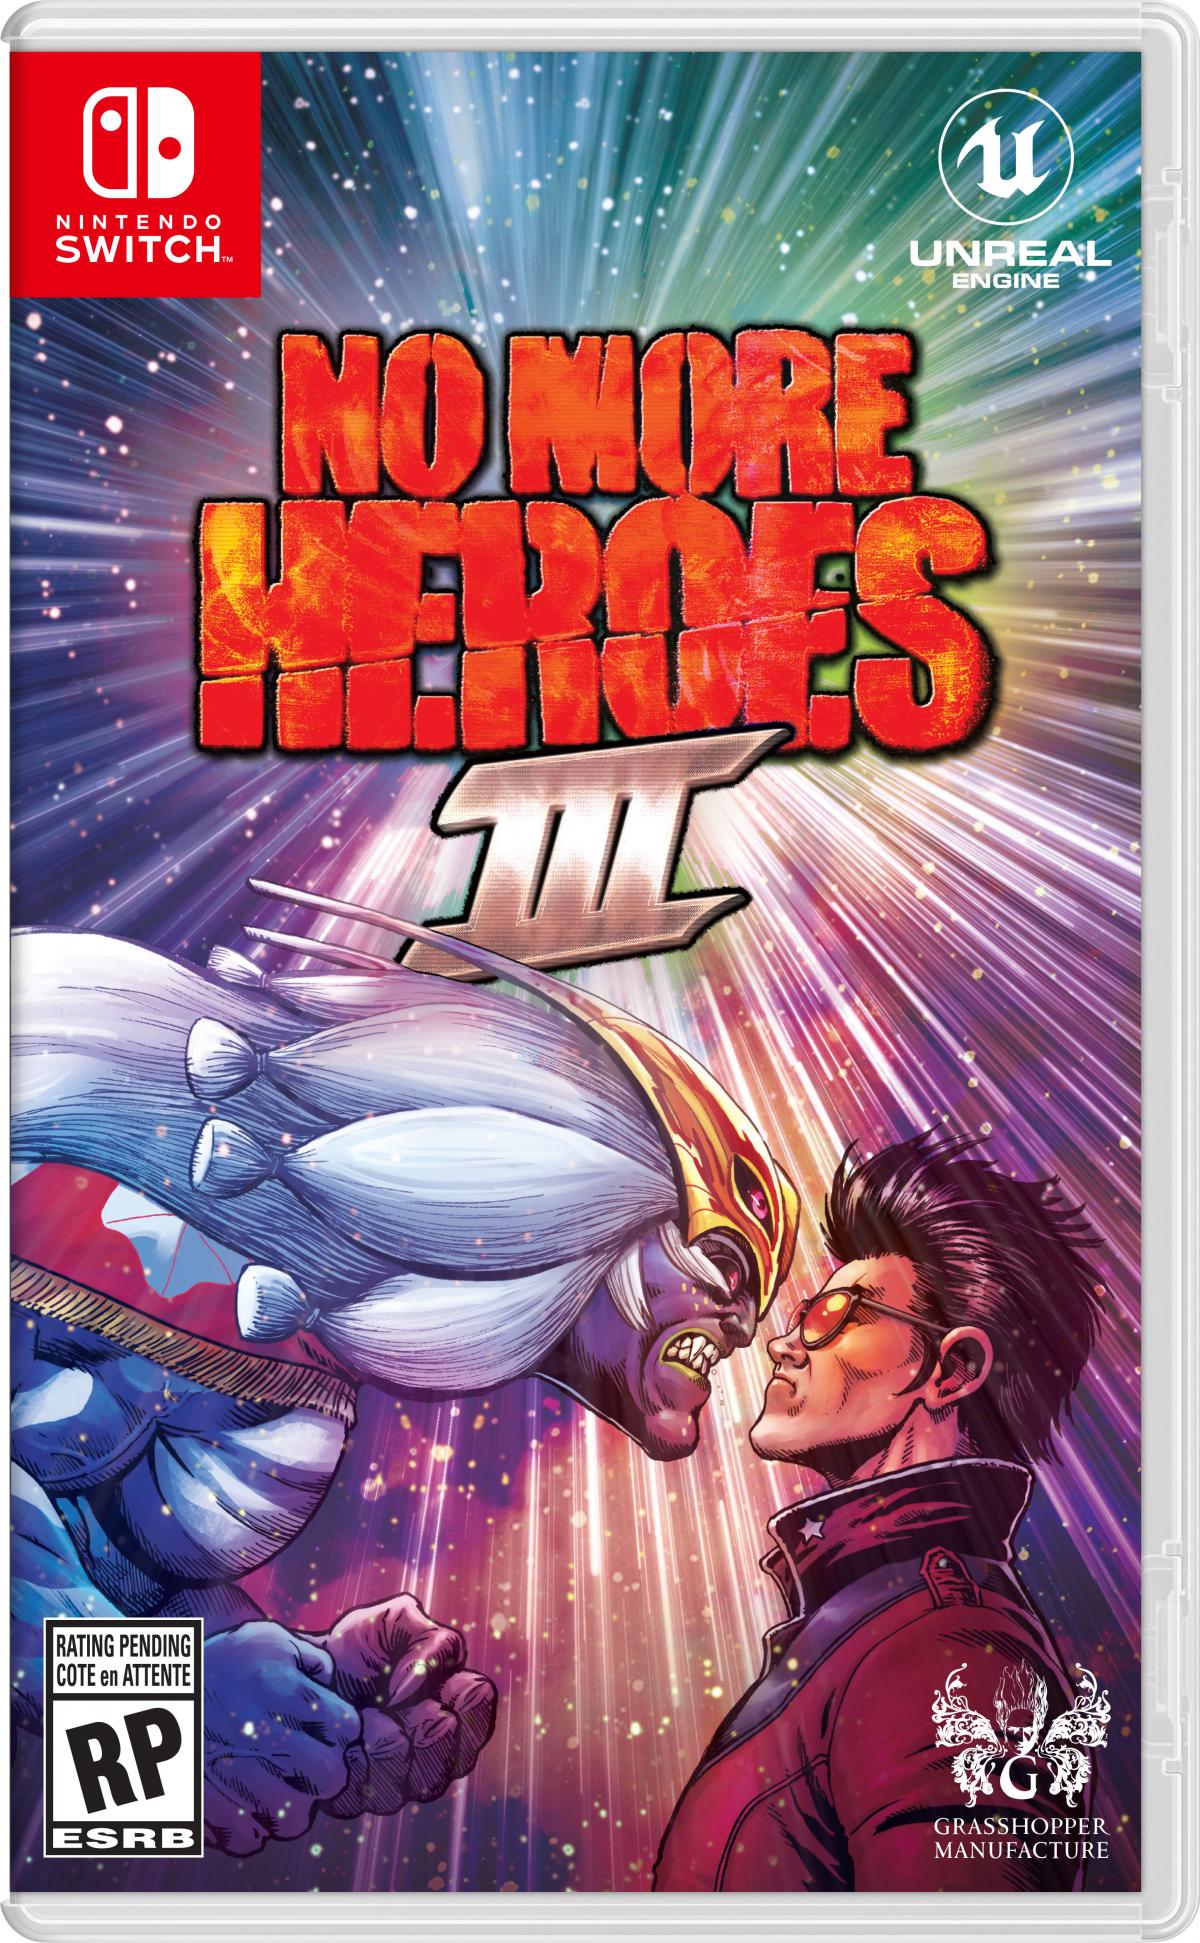 Image No More Heroes III 39